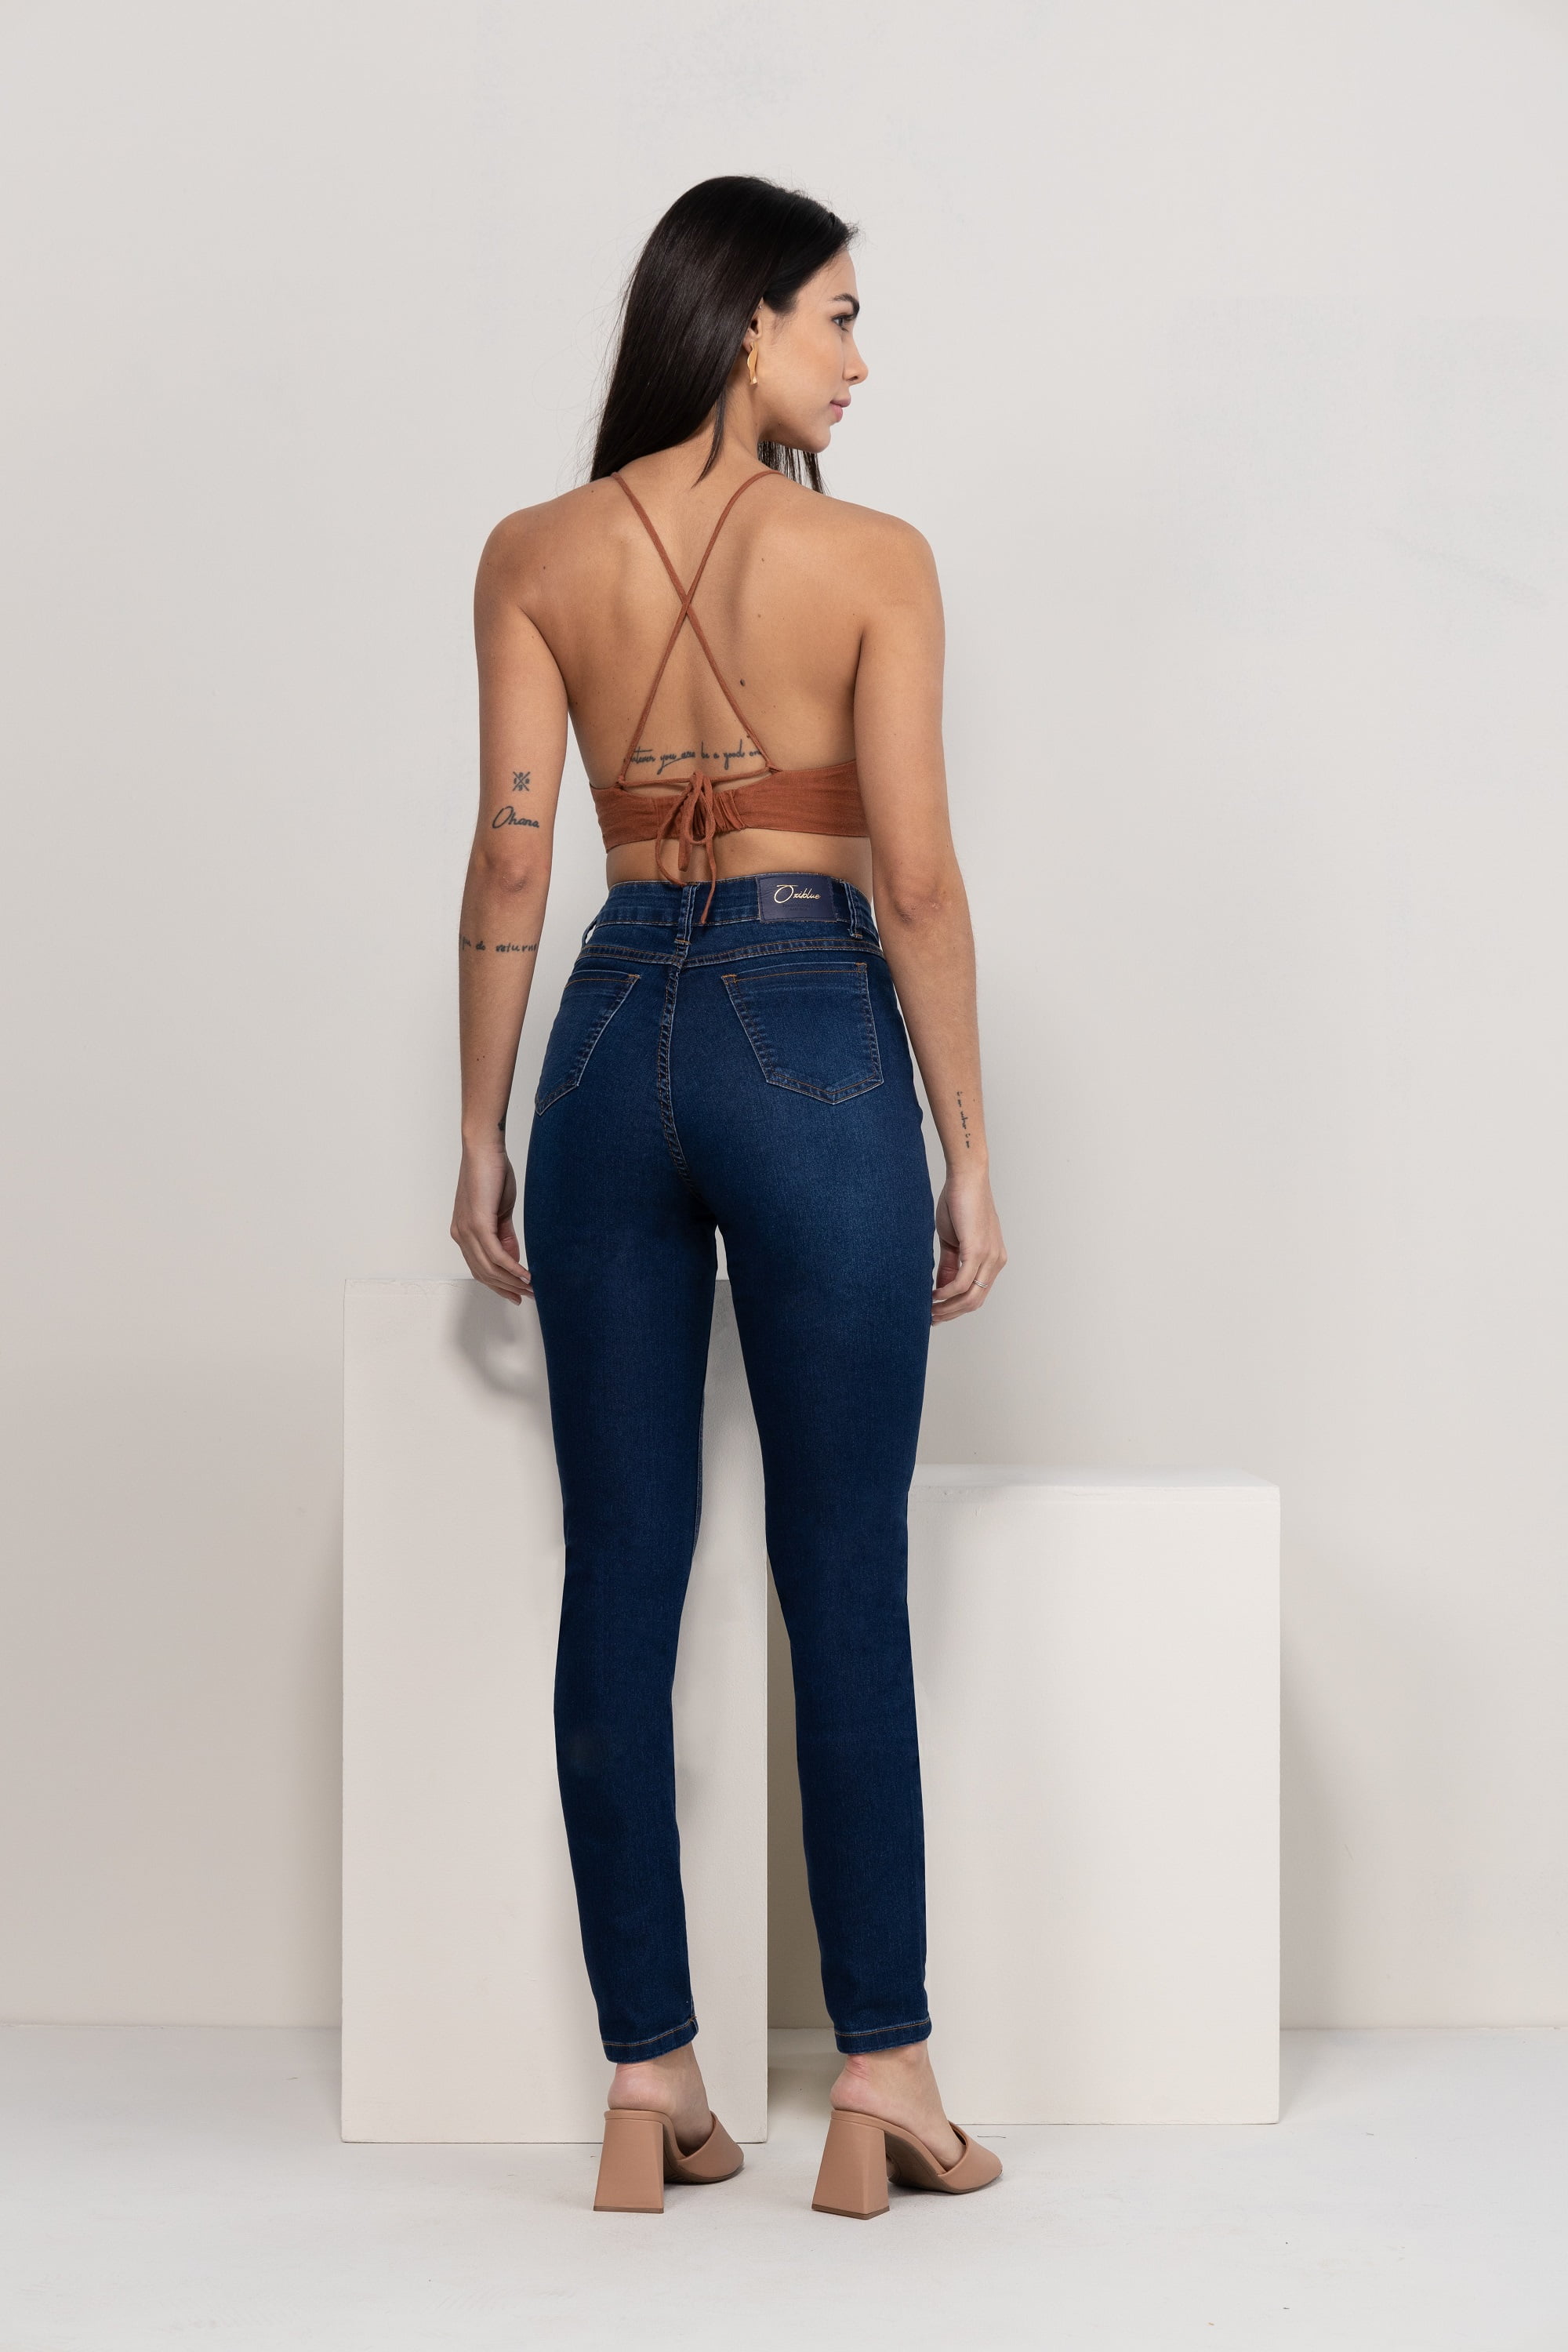 Calça Jeans Feminina Skinny Push Up Azul Médio F2023013 - Oxiblue